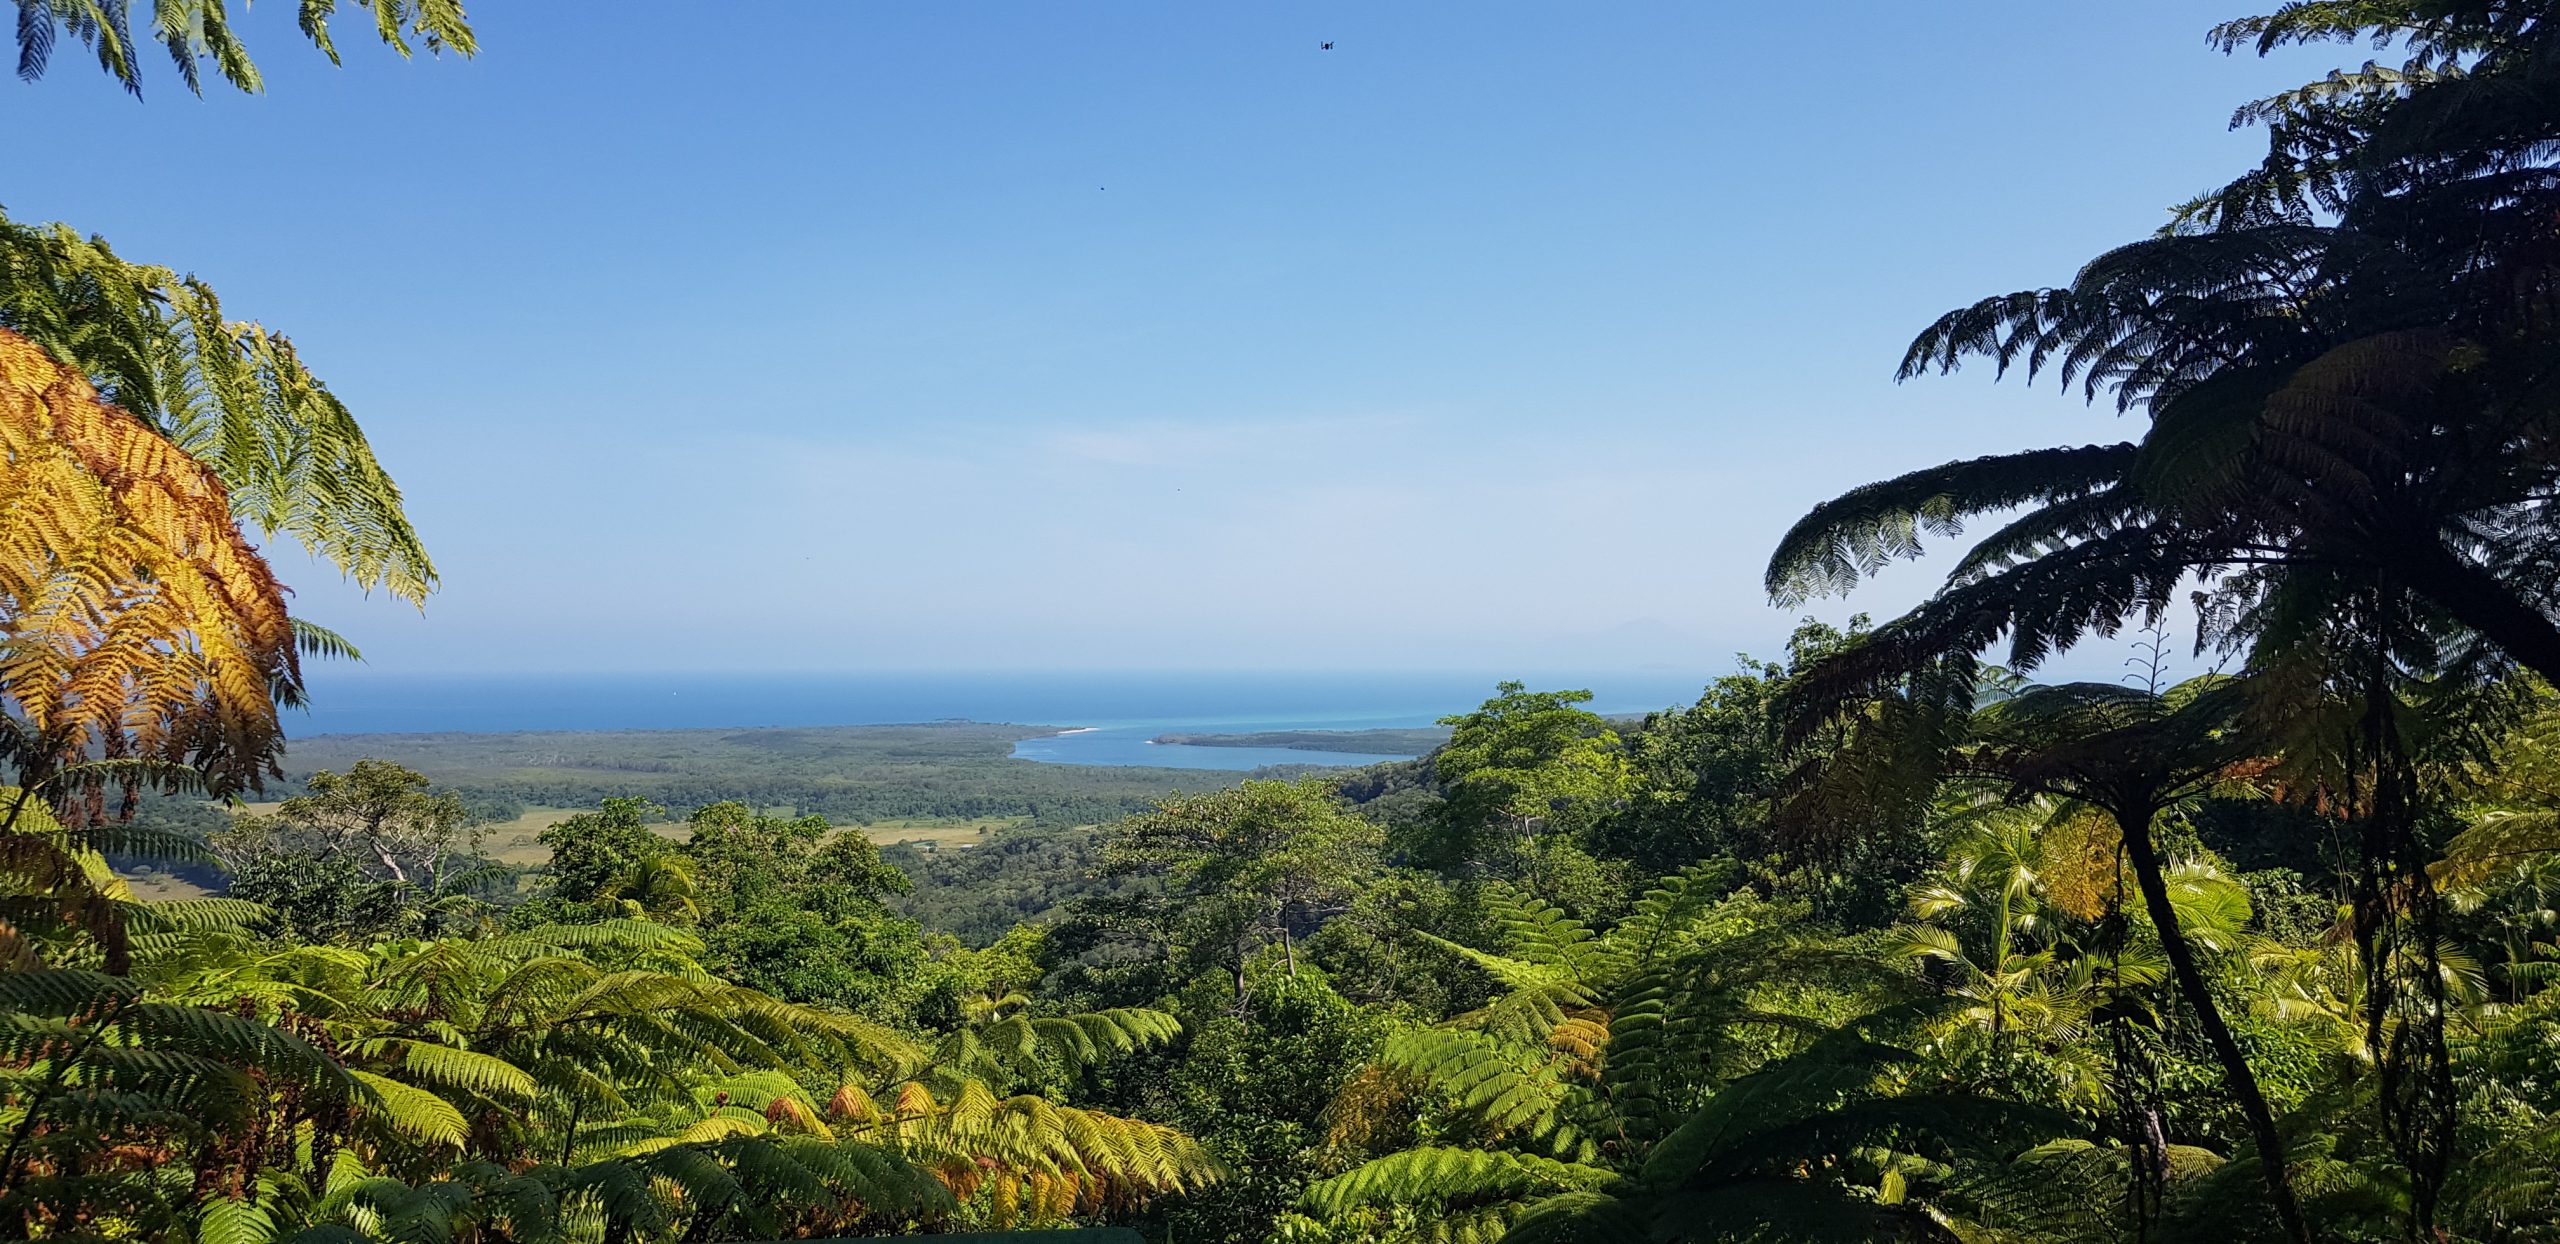 Mount Alexandra in the Daintree Rainforest, Queensland Australia